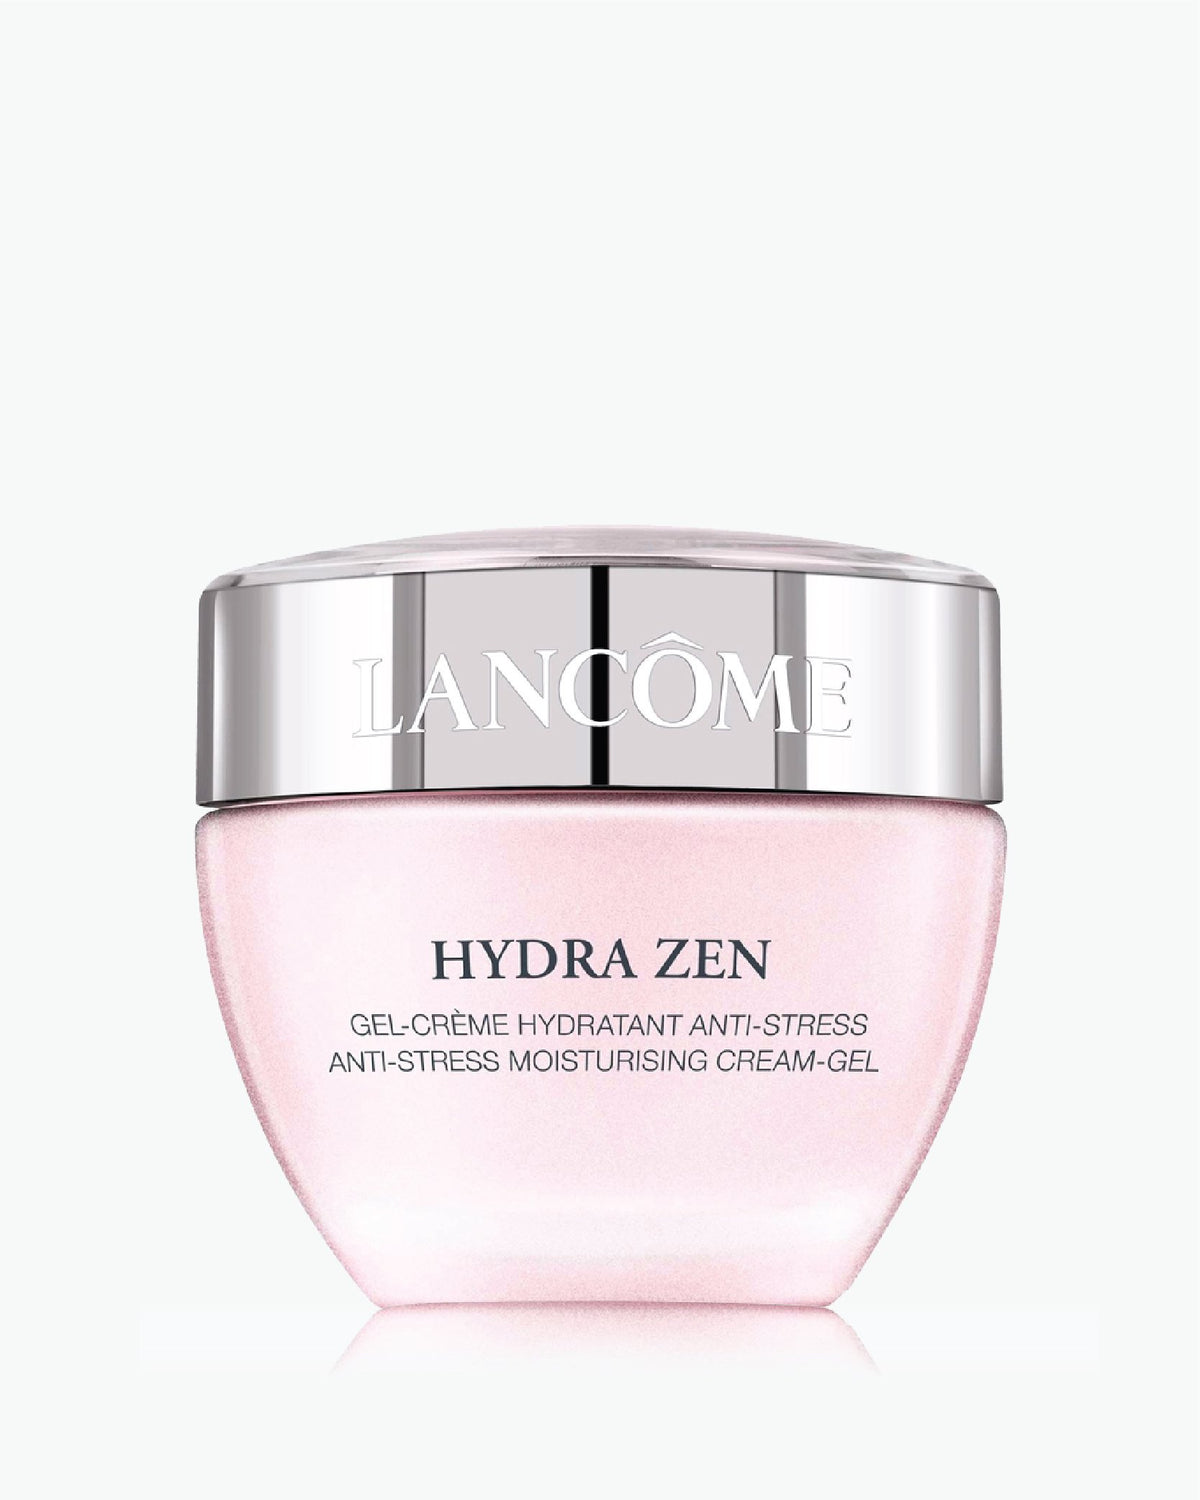 Hydra Zen Anti-Stress Gel Cream, Anti-Stress Moisturizing Cream Gel